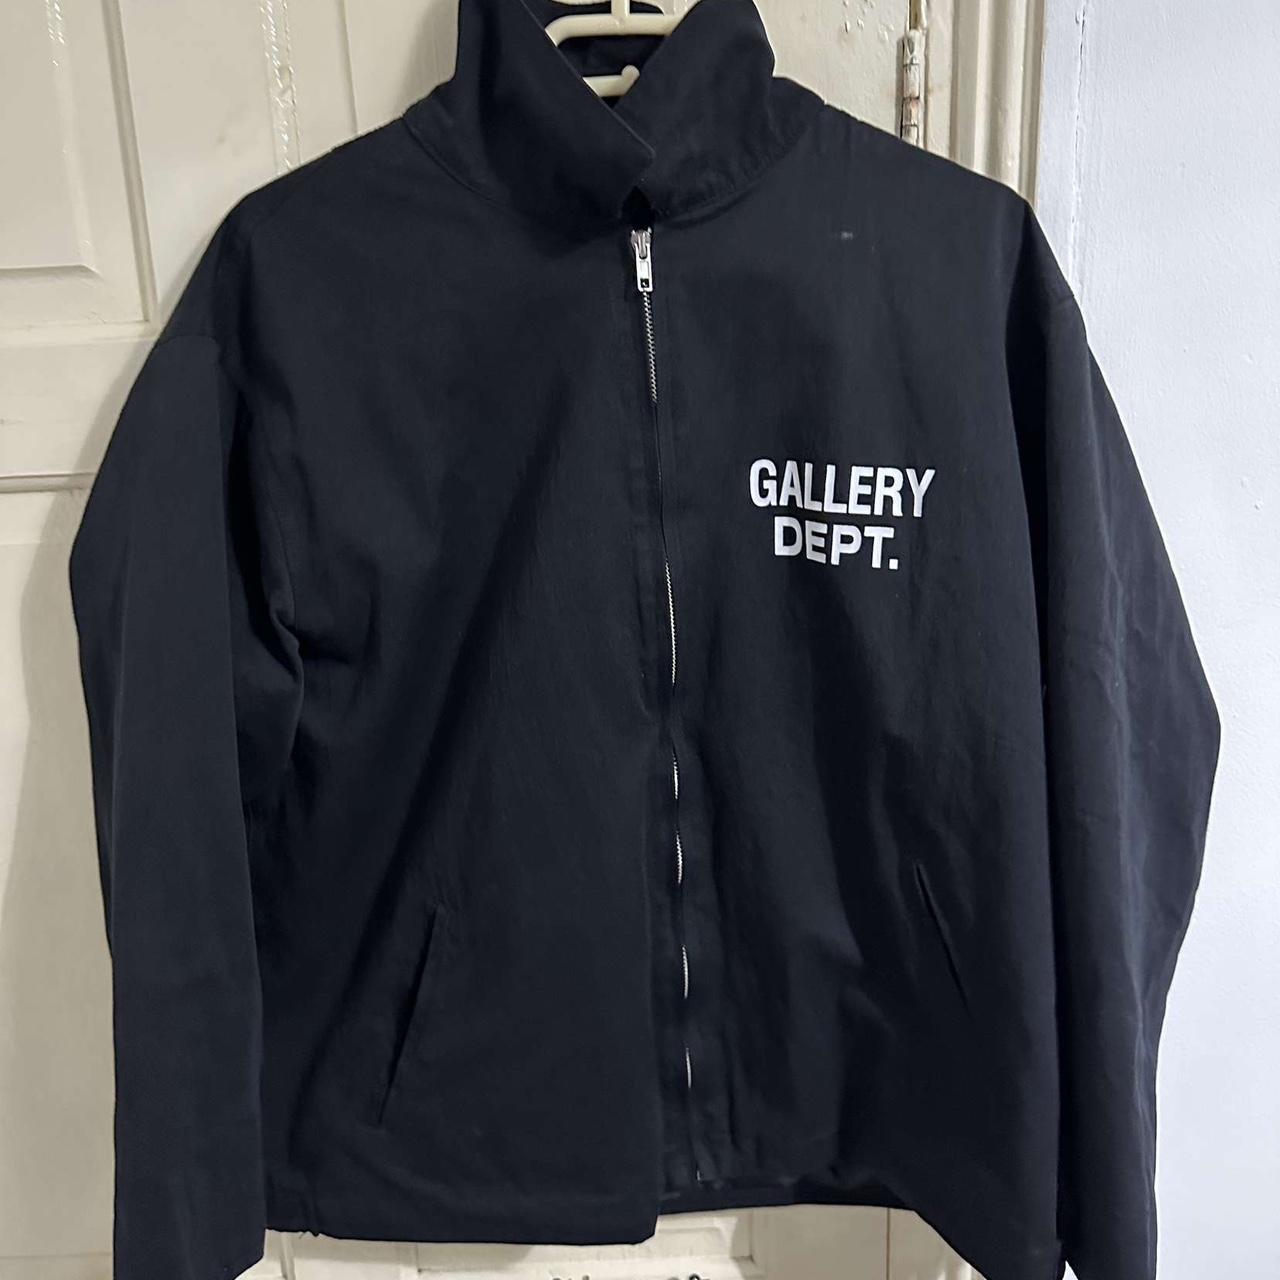 Gallery dept jacket Worn twice in good condition... - Depop